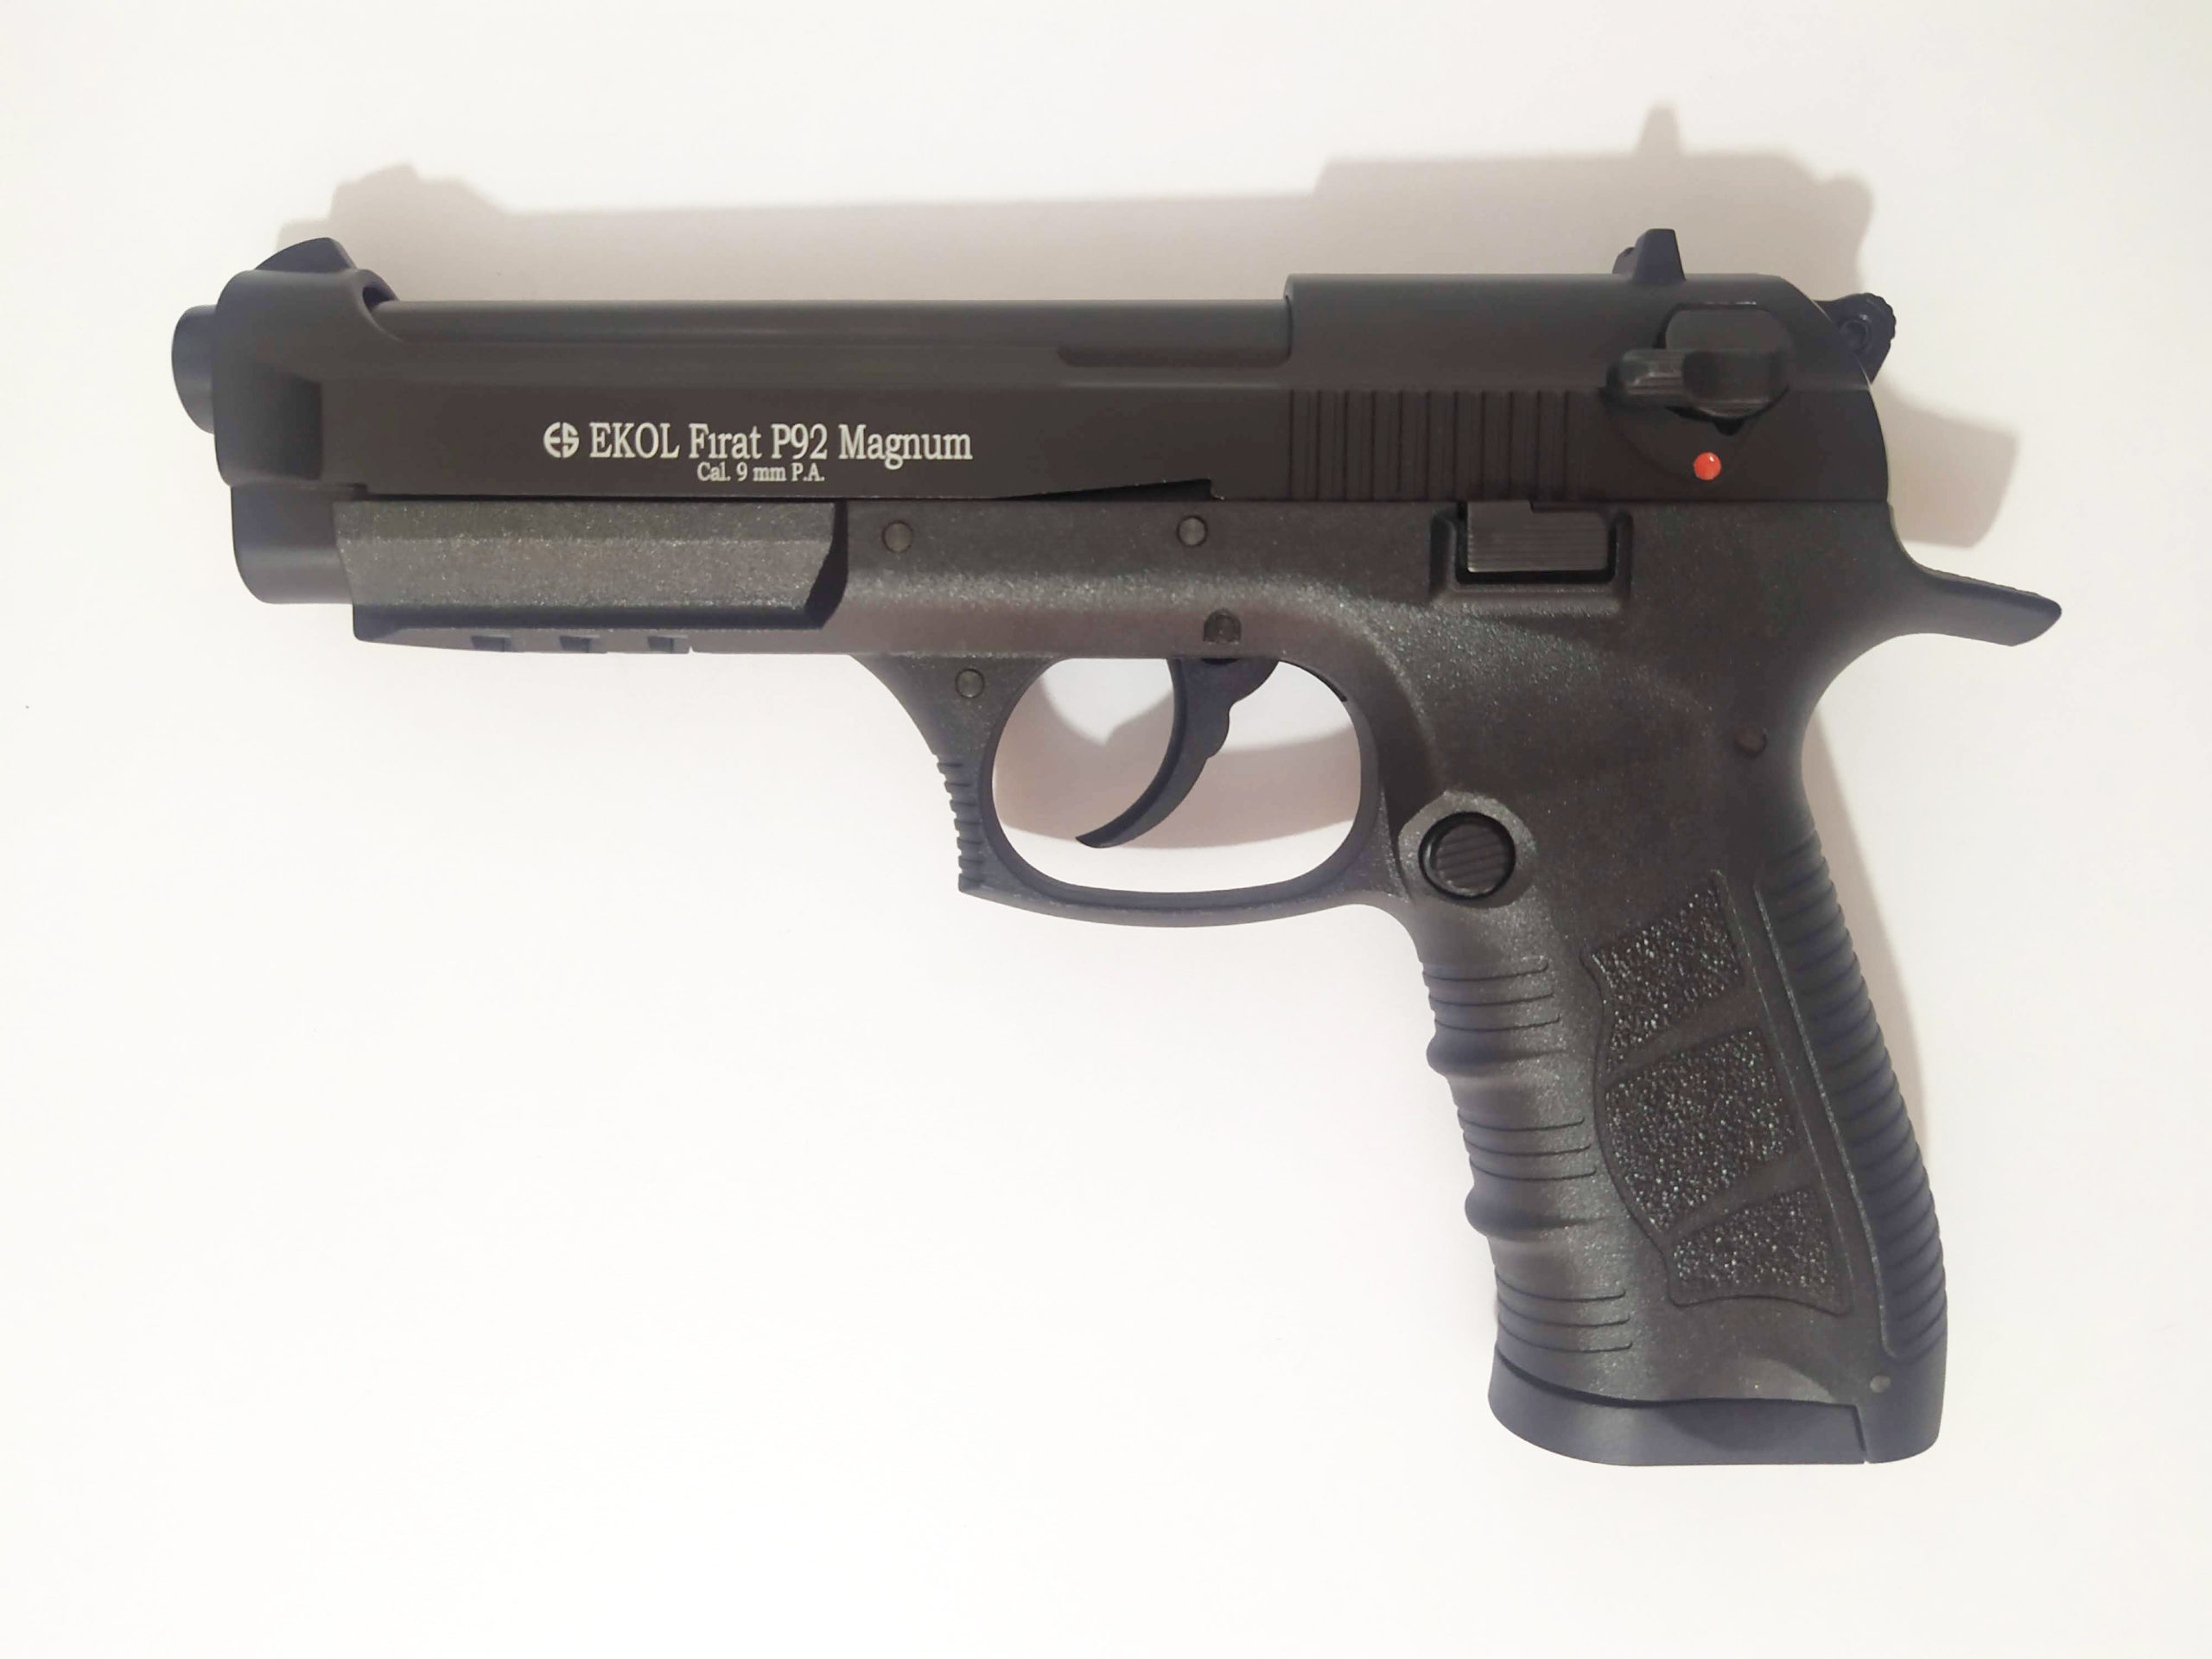 Pistola Traumática Fogueo Ekol Firat Magnum Beretta 92 P.A Rubber 9 mm